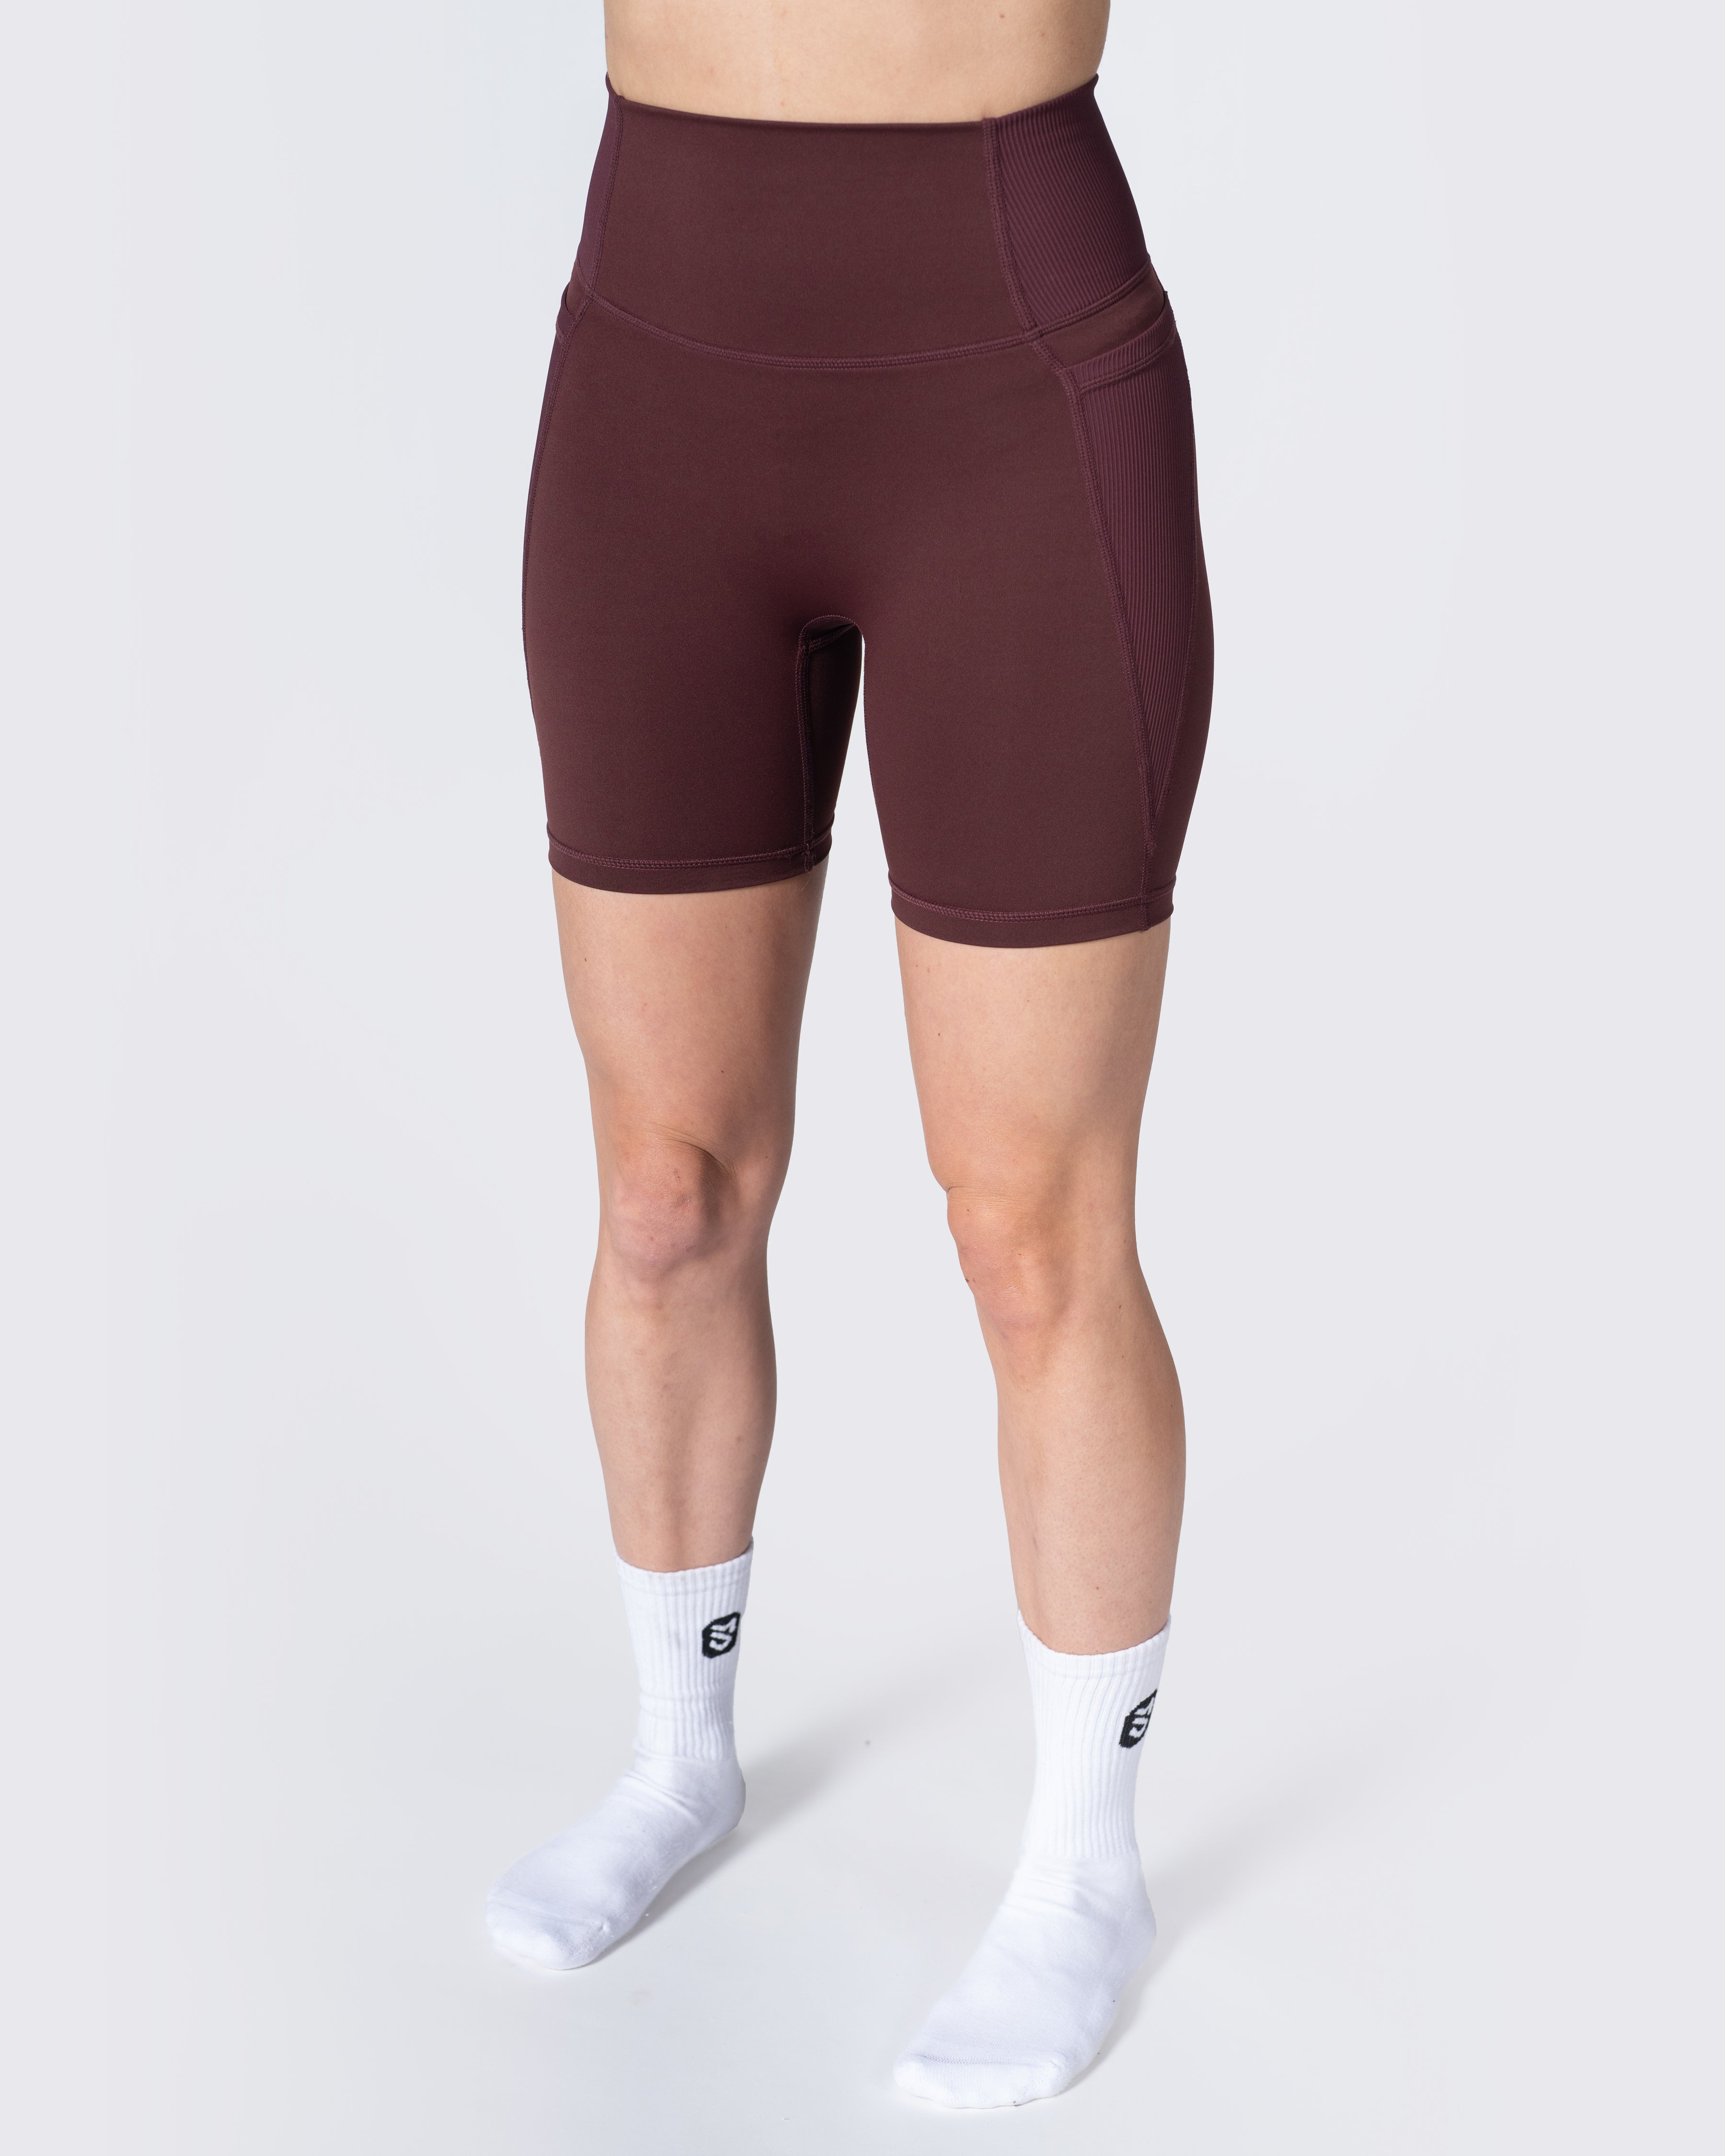 Sleek 6" Biker Shorts